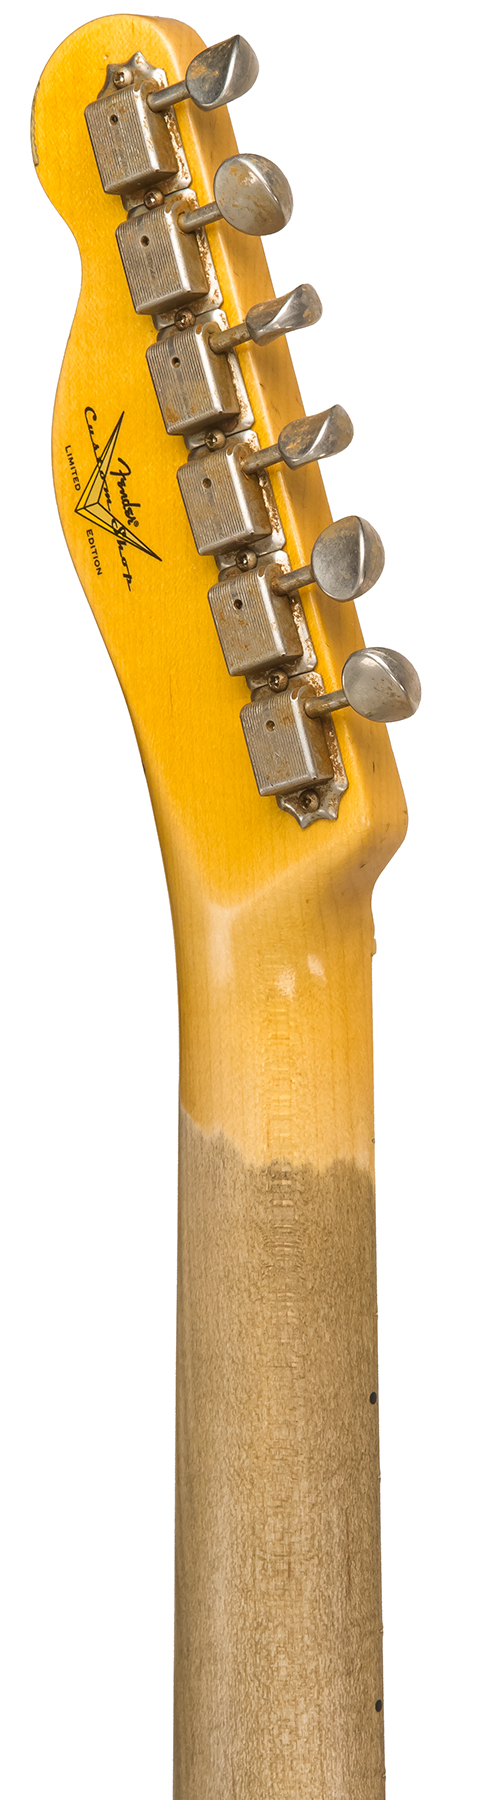 Fender Custom Shop Tele Custom 1963 2020 Ltd Rw #cz545983 - Relic Chartreuse Sparkle - Tel shape electric guitar - Variation 5